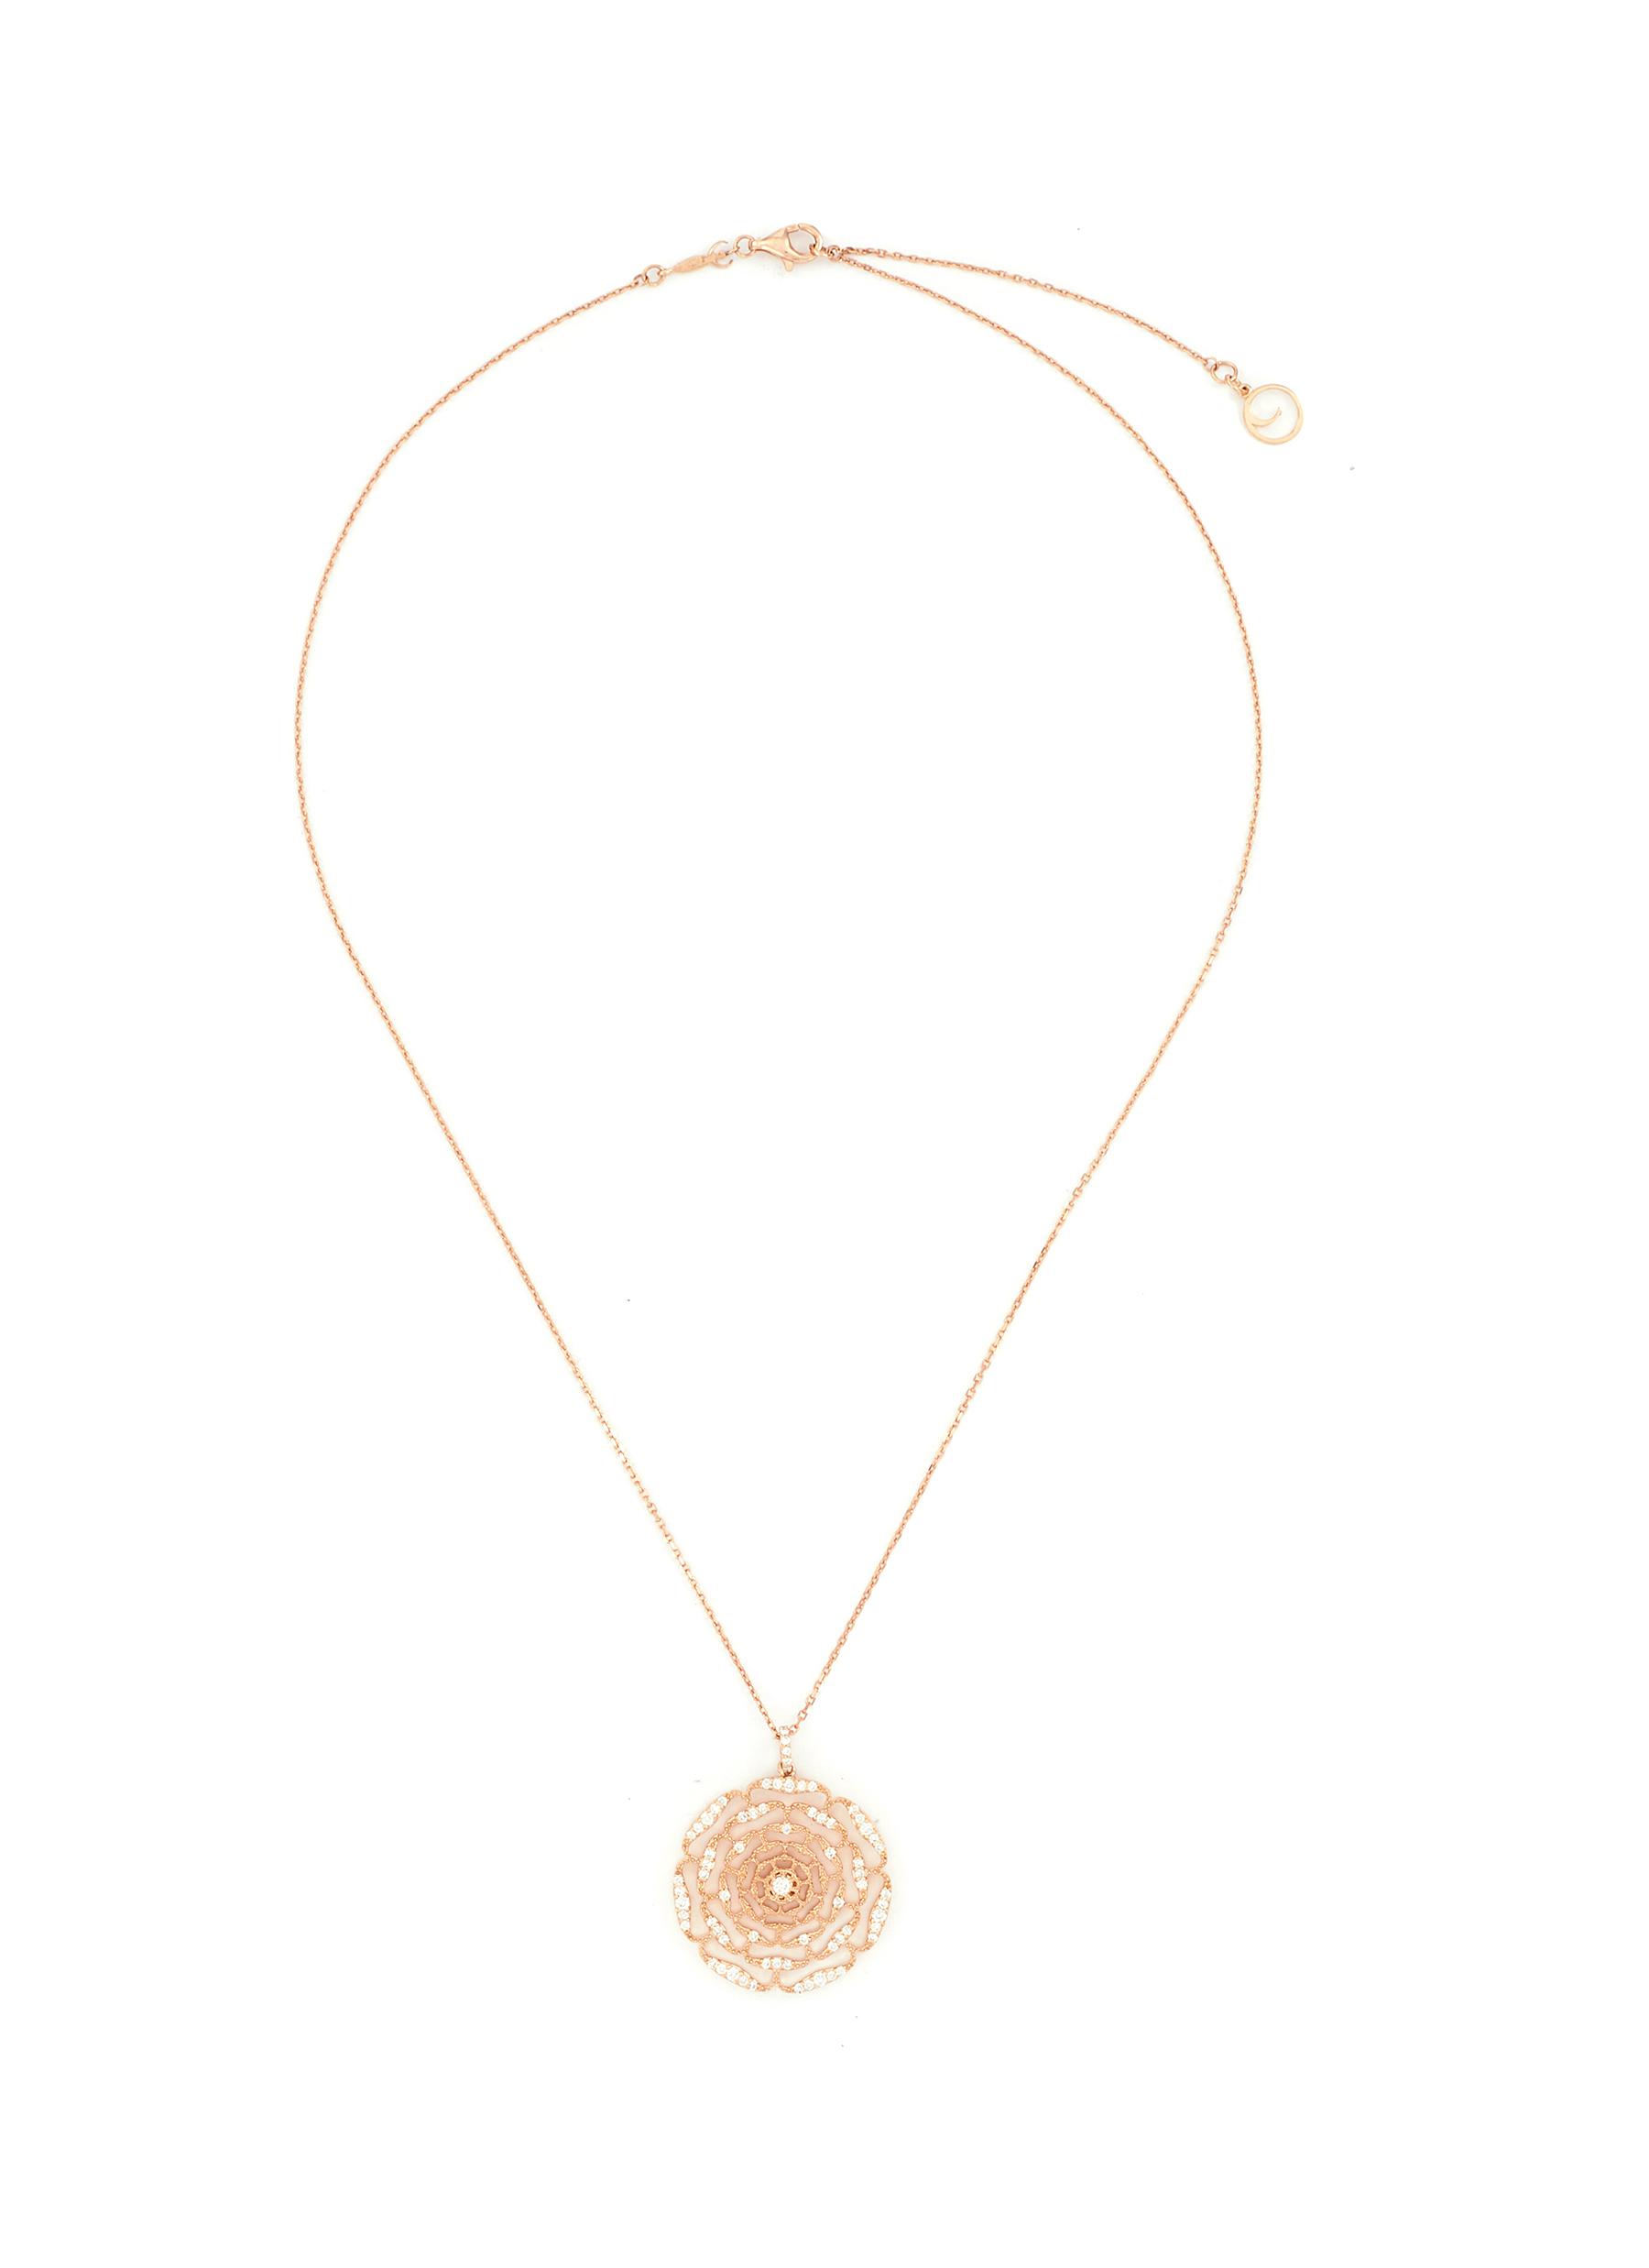 BEE GODDESS 'Secret Garden' diamond 14k rose gold rosa mundi necklace